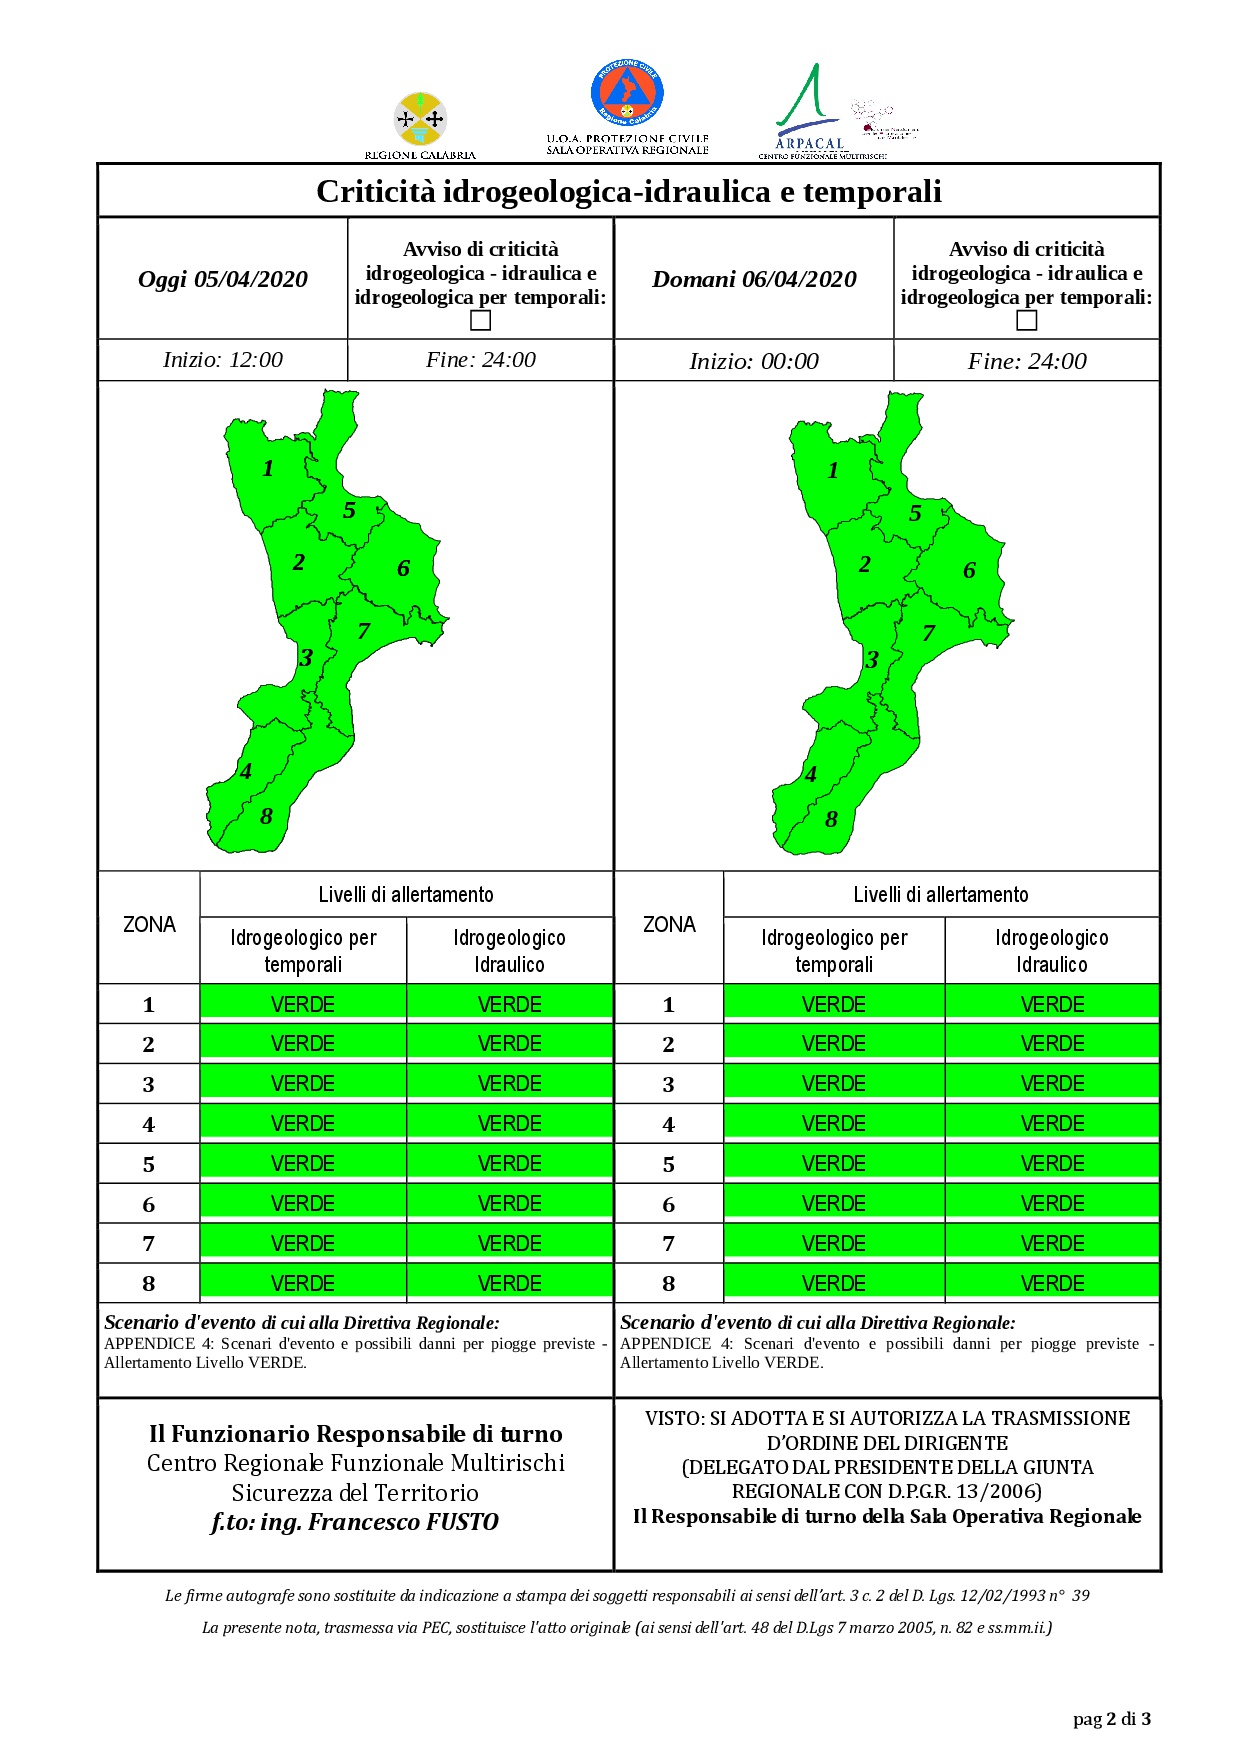 Criticità idrogeologica-idraulica e temporali in Calabria 05-04-2020